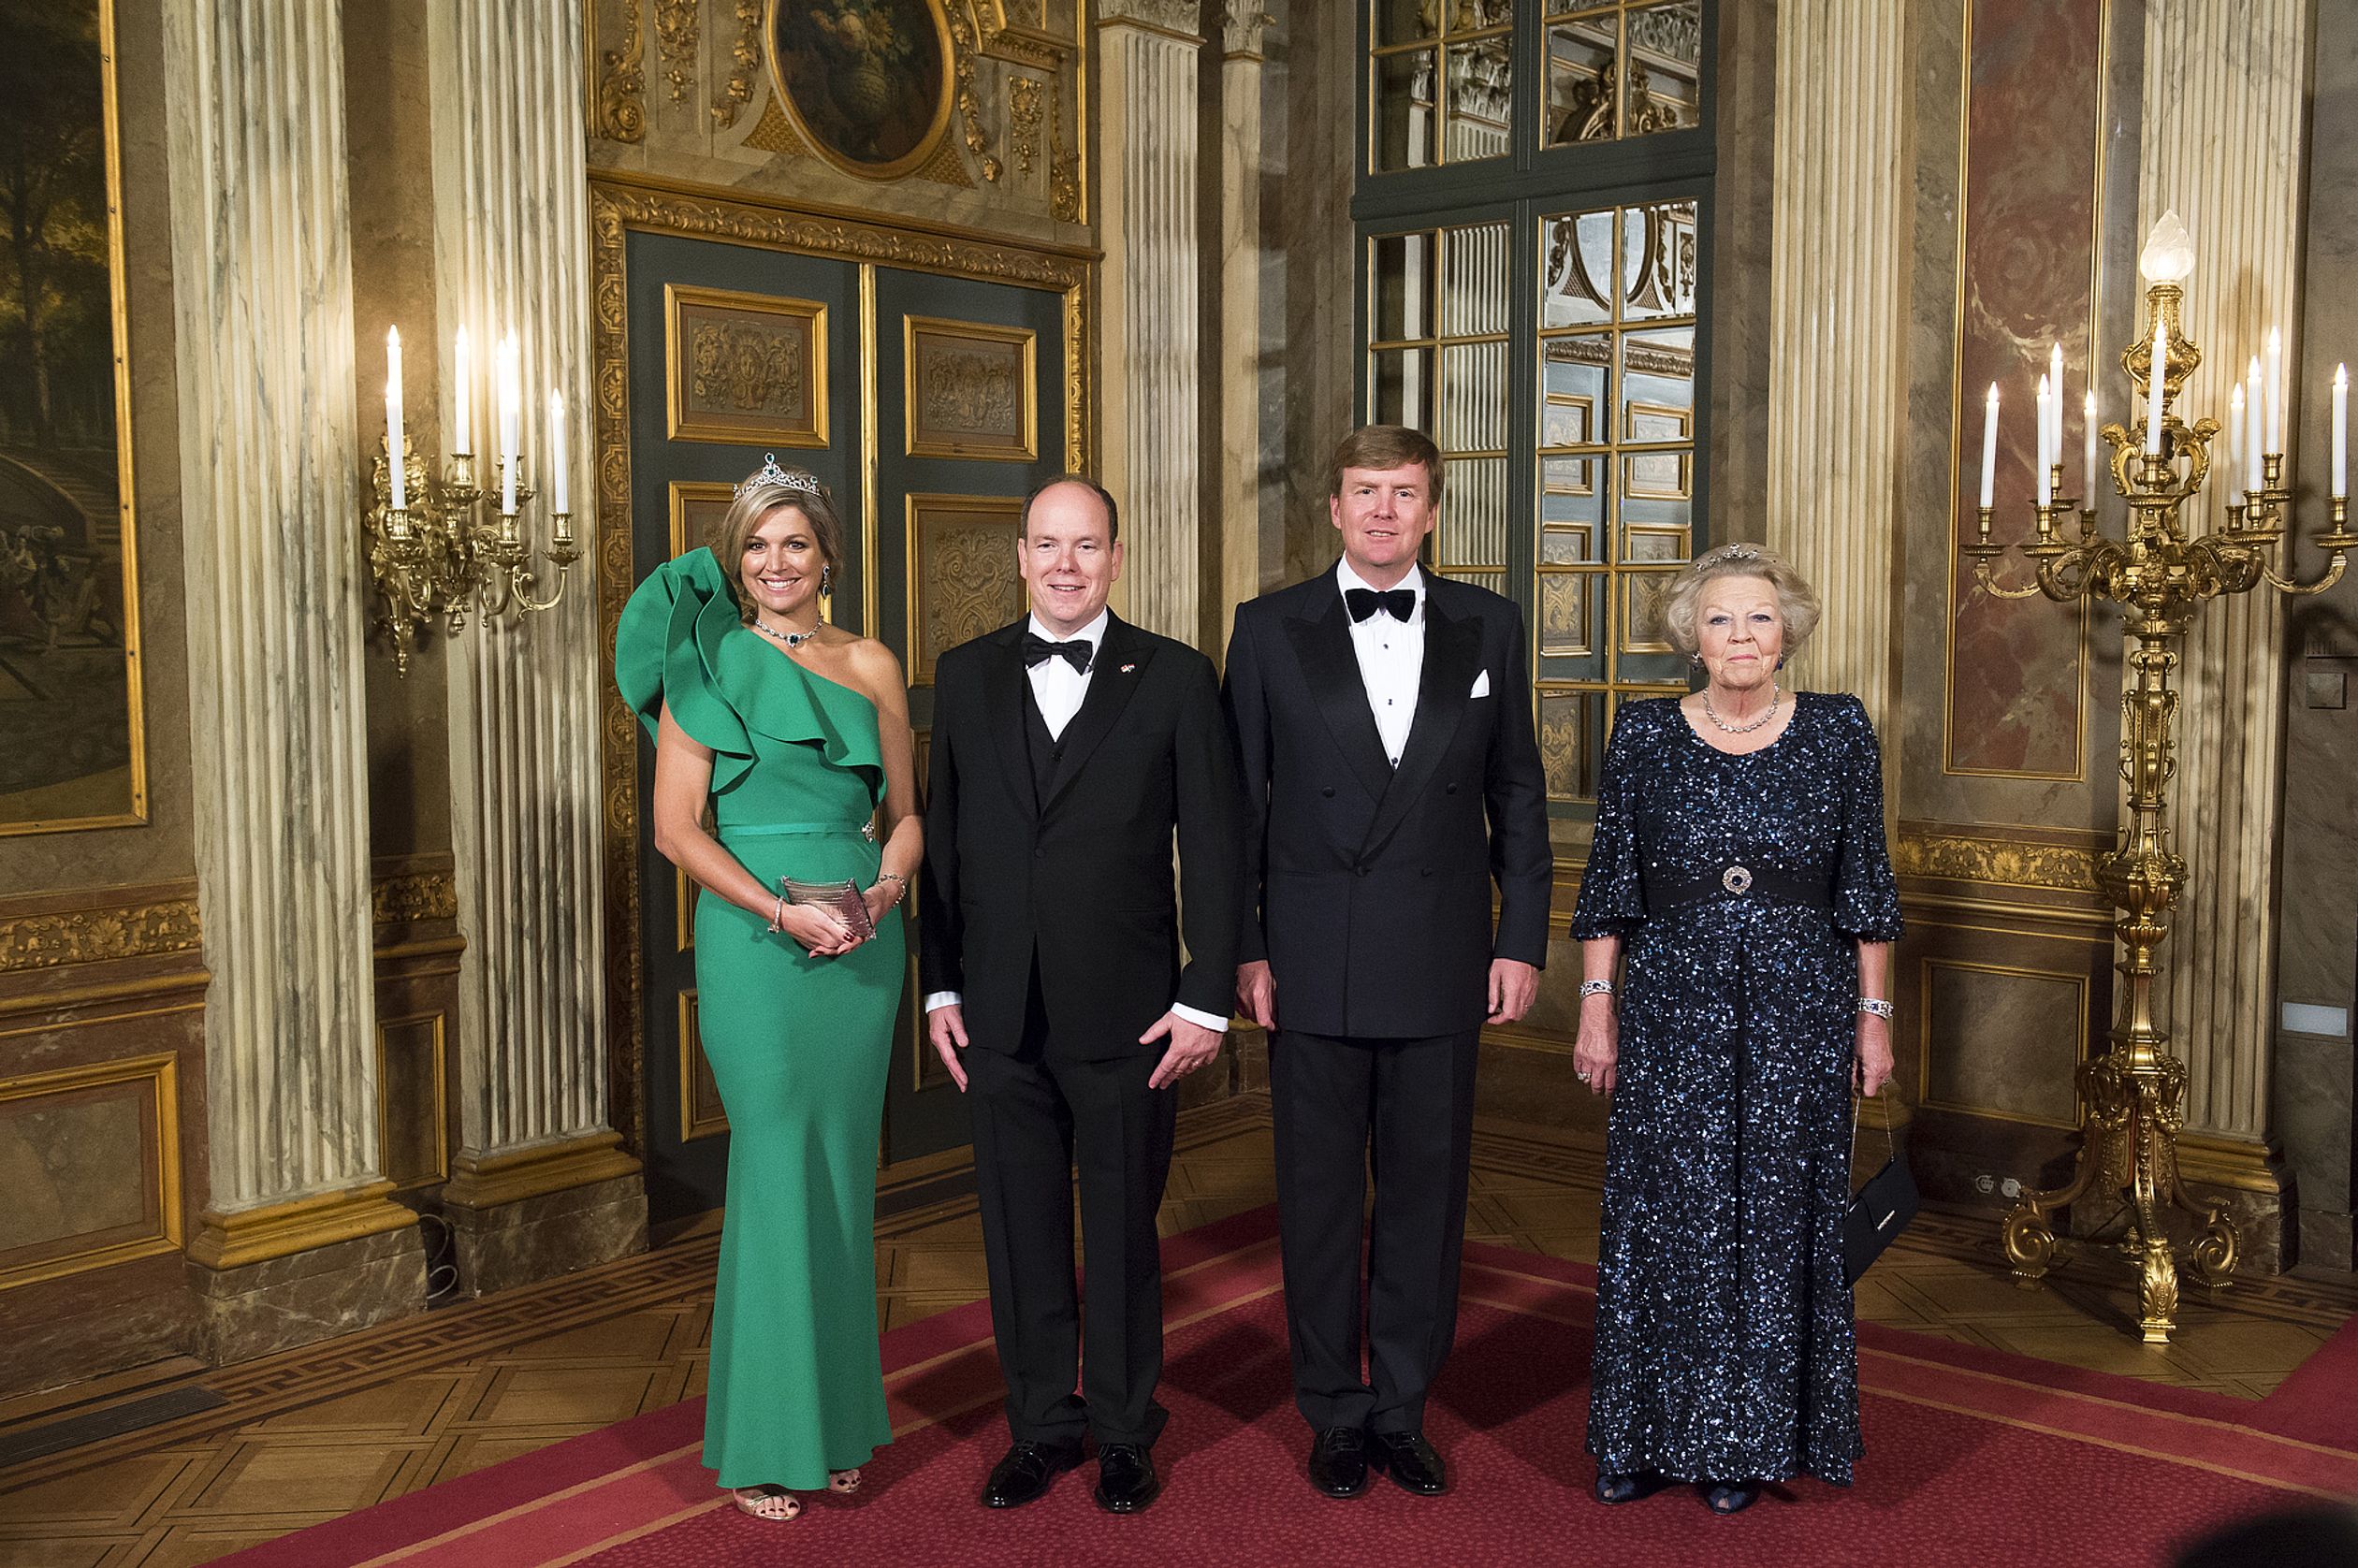 Koningin Máxima, prins Albert van Monaco, koning Willem-Alexander en prinses Beatrix poseren